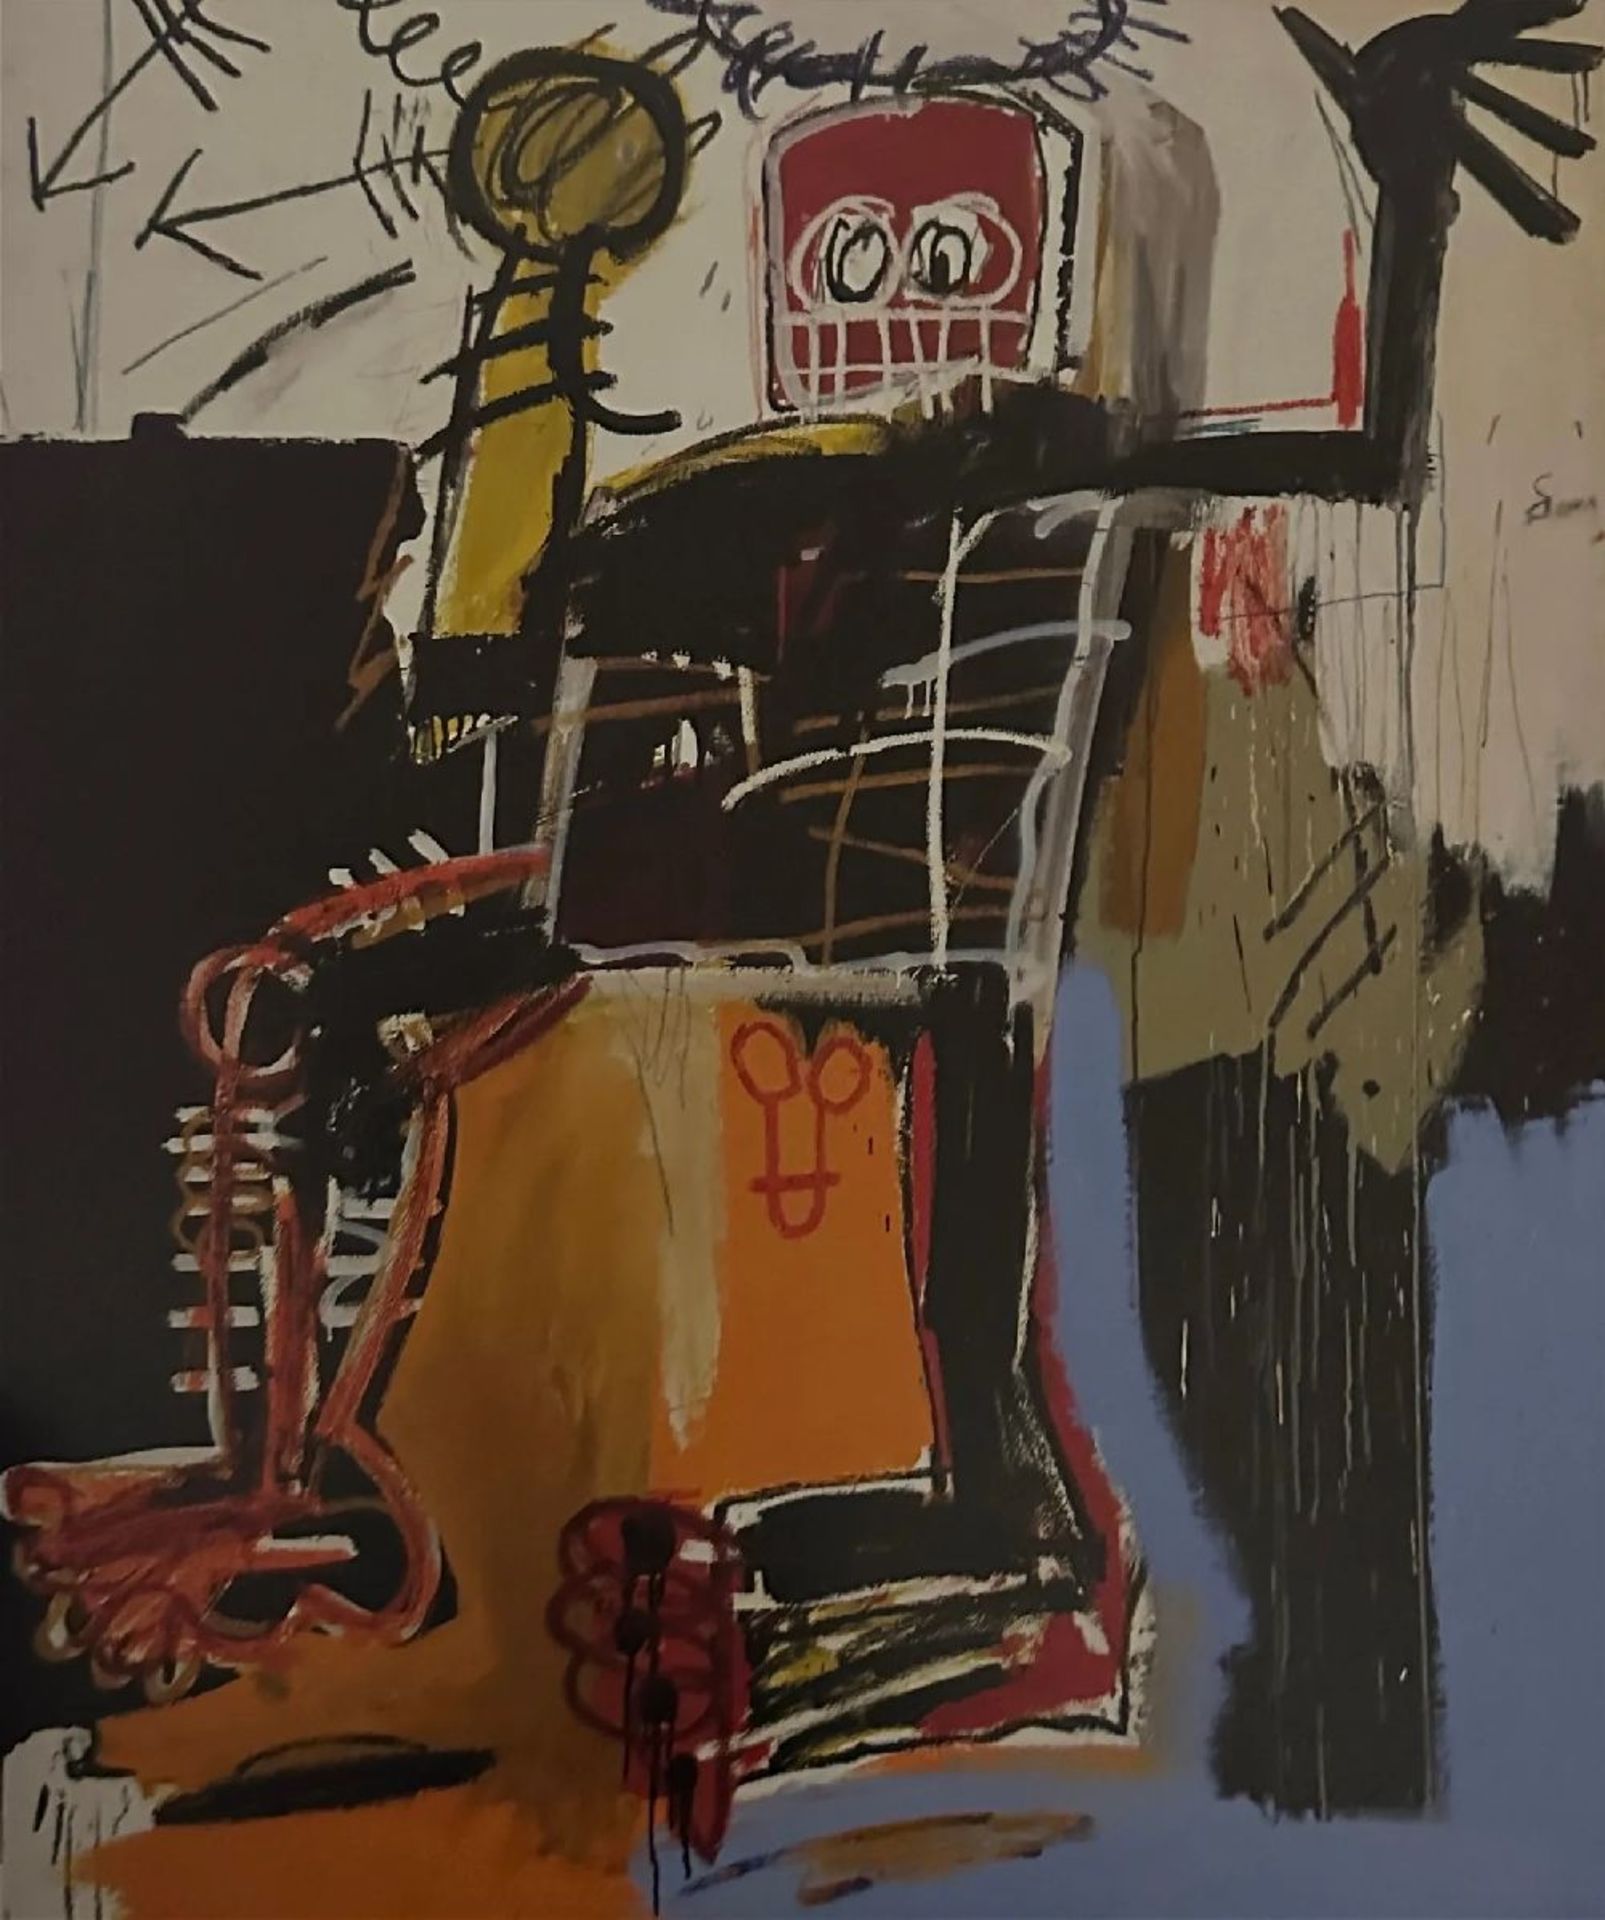 Jean-Michel Basquiat "Untitled" Print.